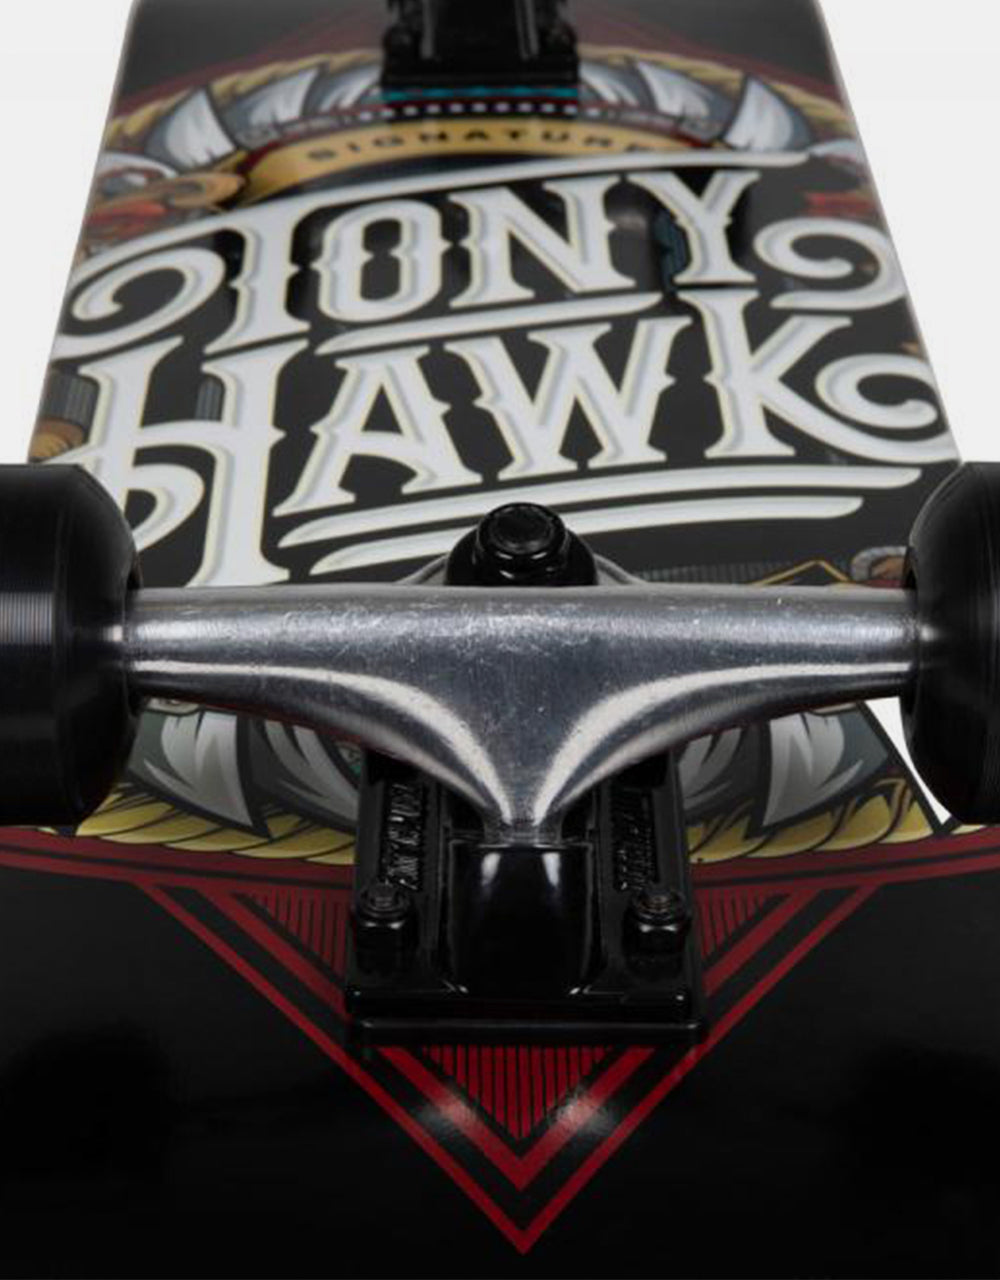 Tony Hawk 360 TH Emblem Complete Skateboard - 7.75"